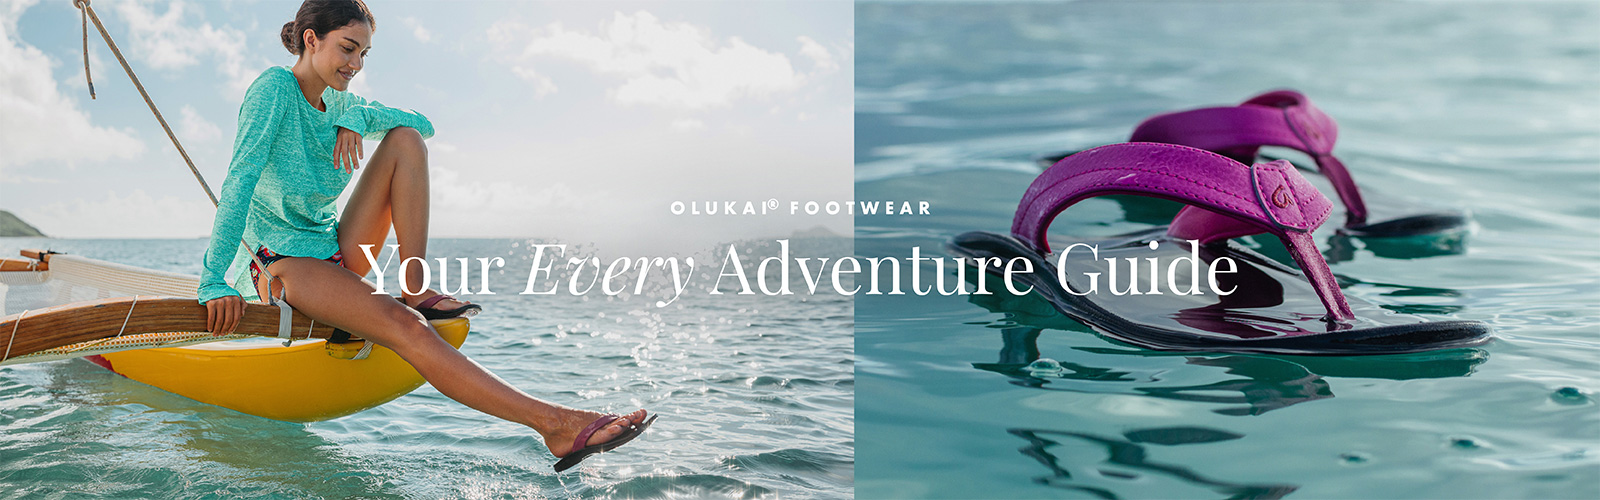 OluKai® Footwear - Your Every Adventure Guide